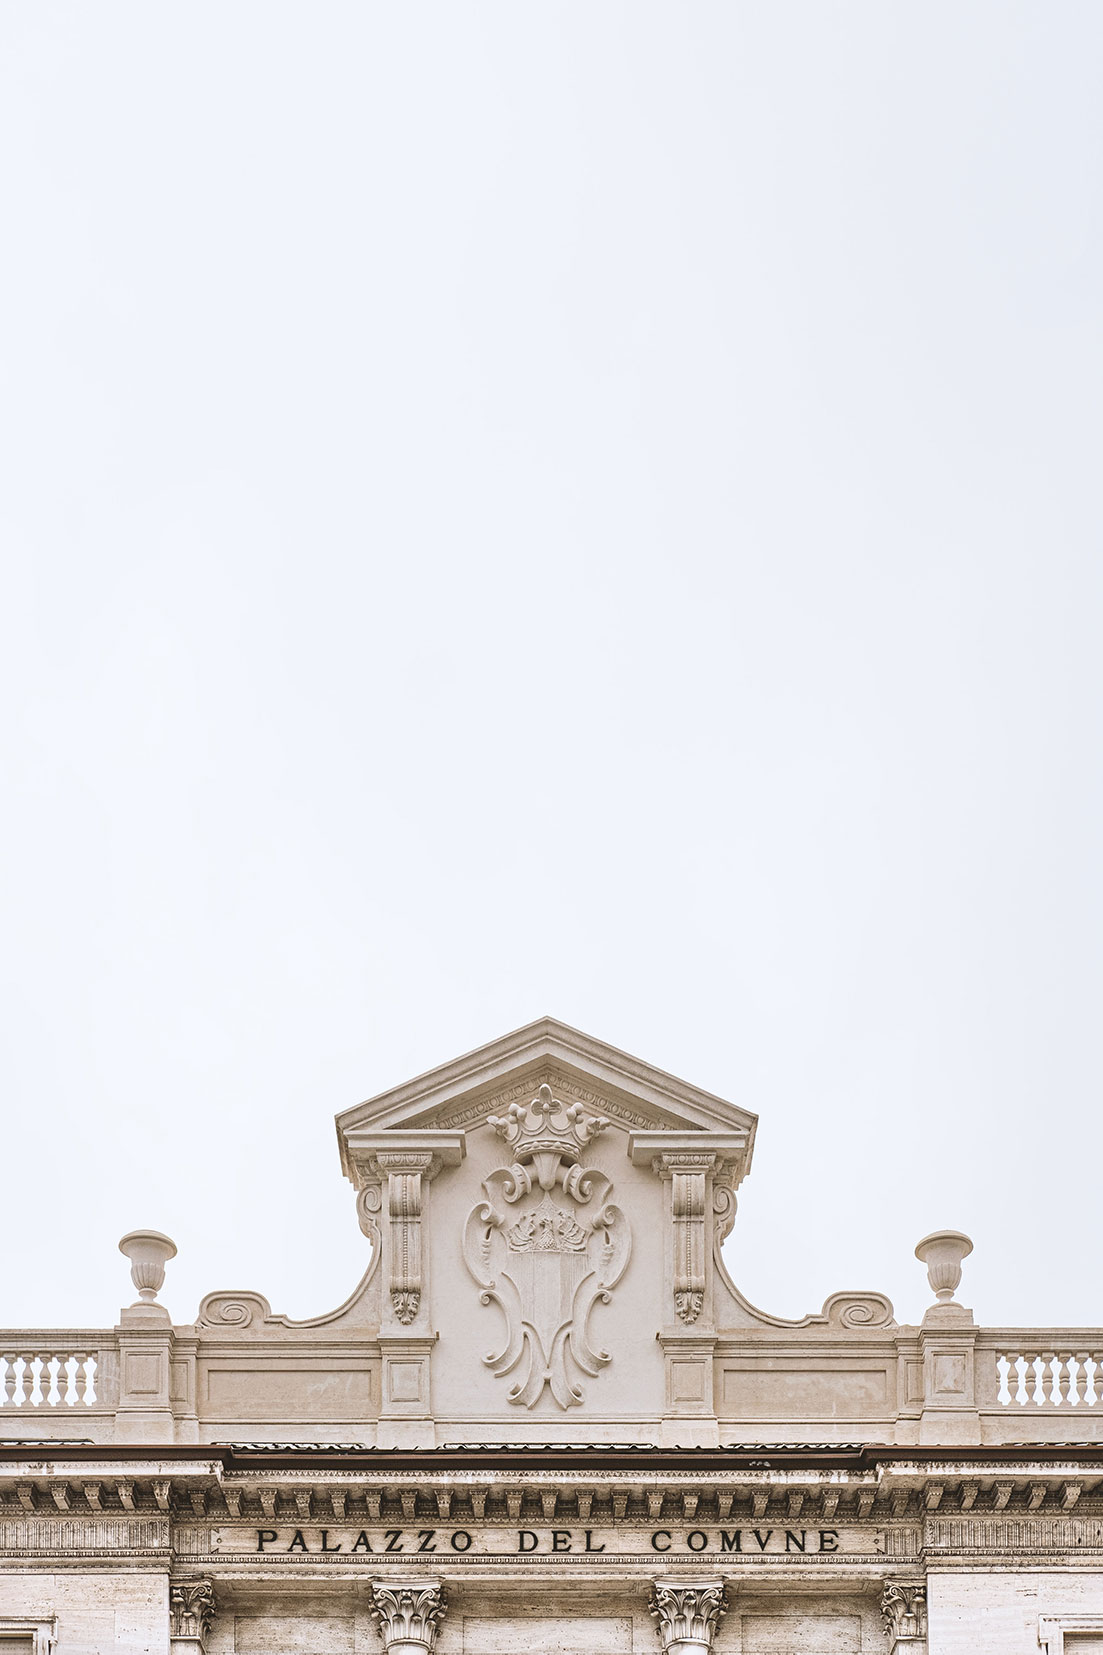 The Sky Above City - City Hall by Tiziano L. U. Caviglia